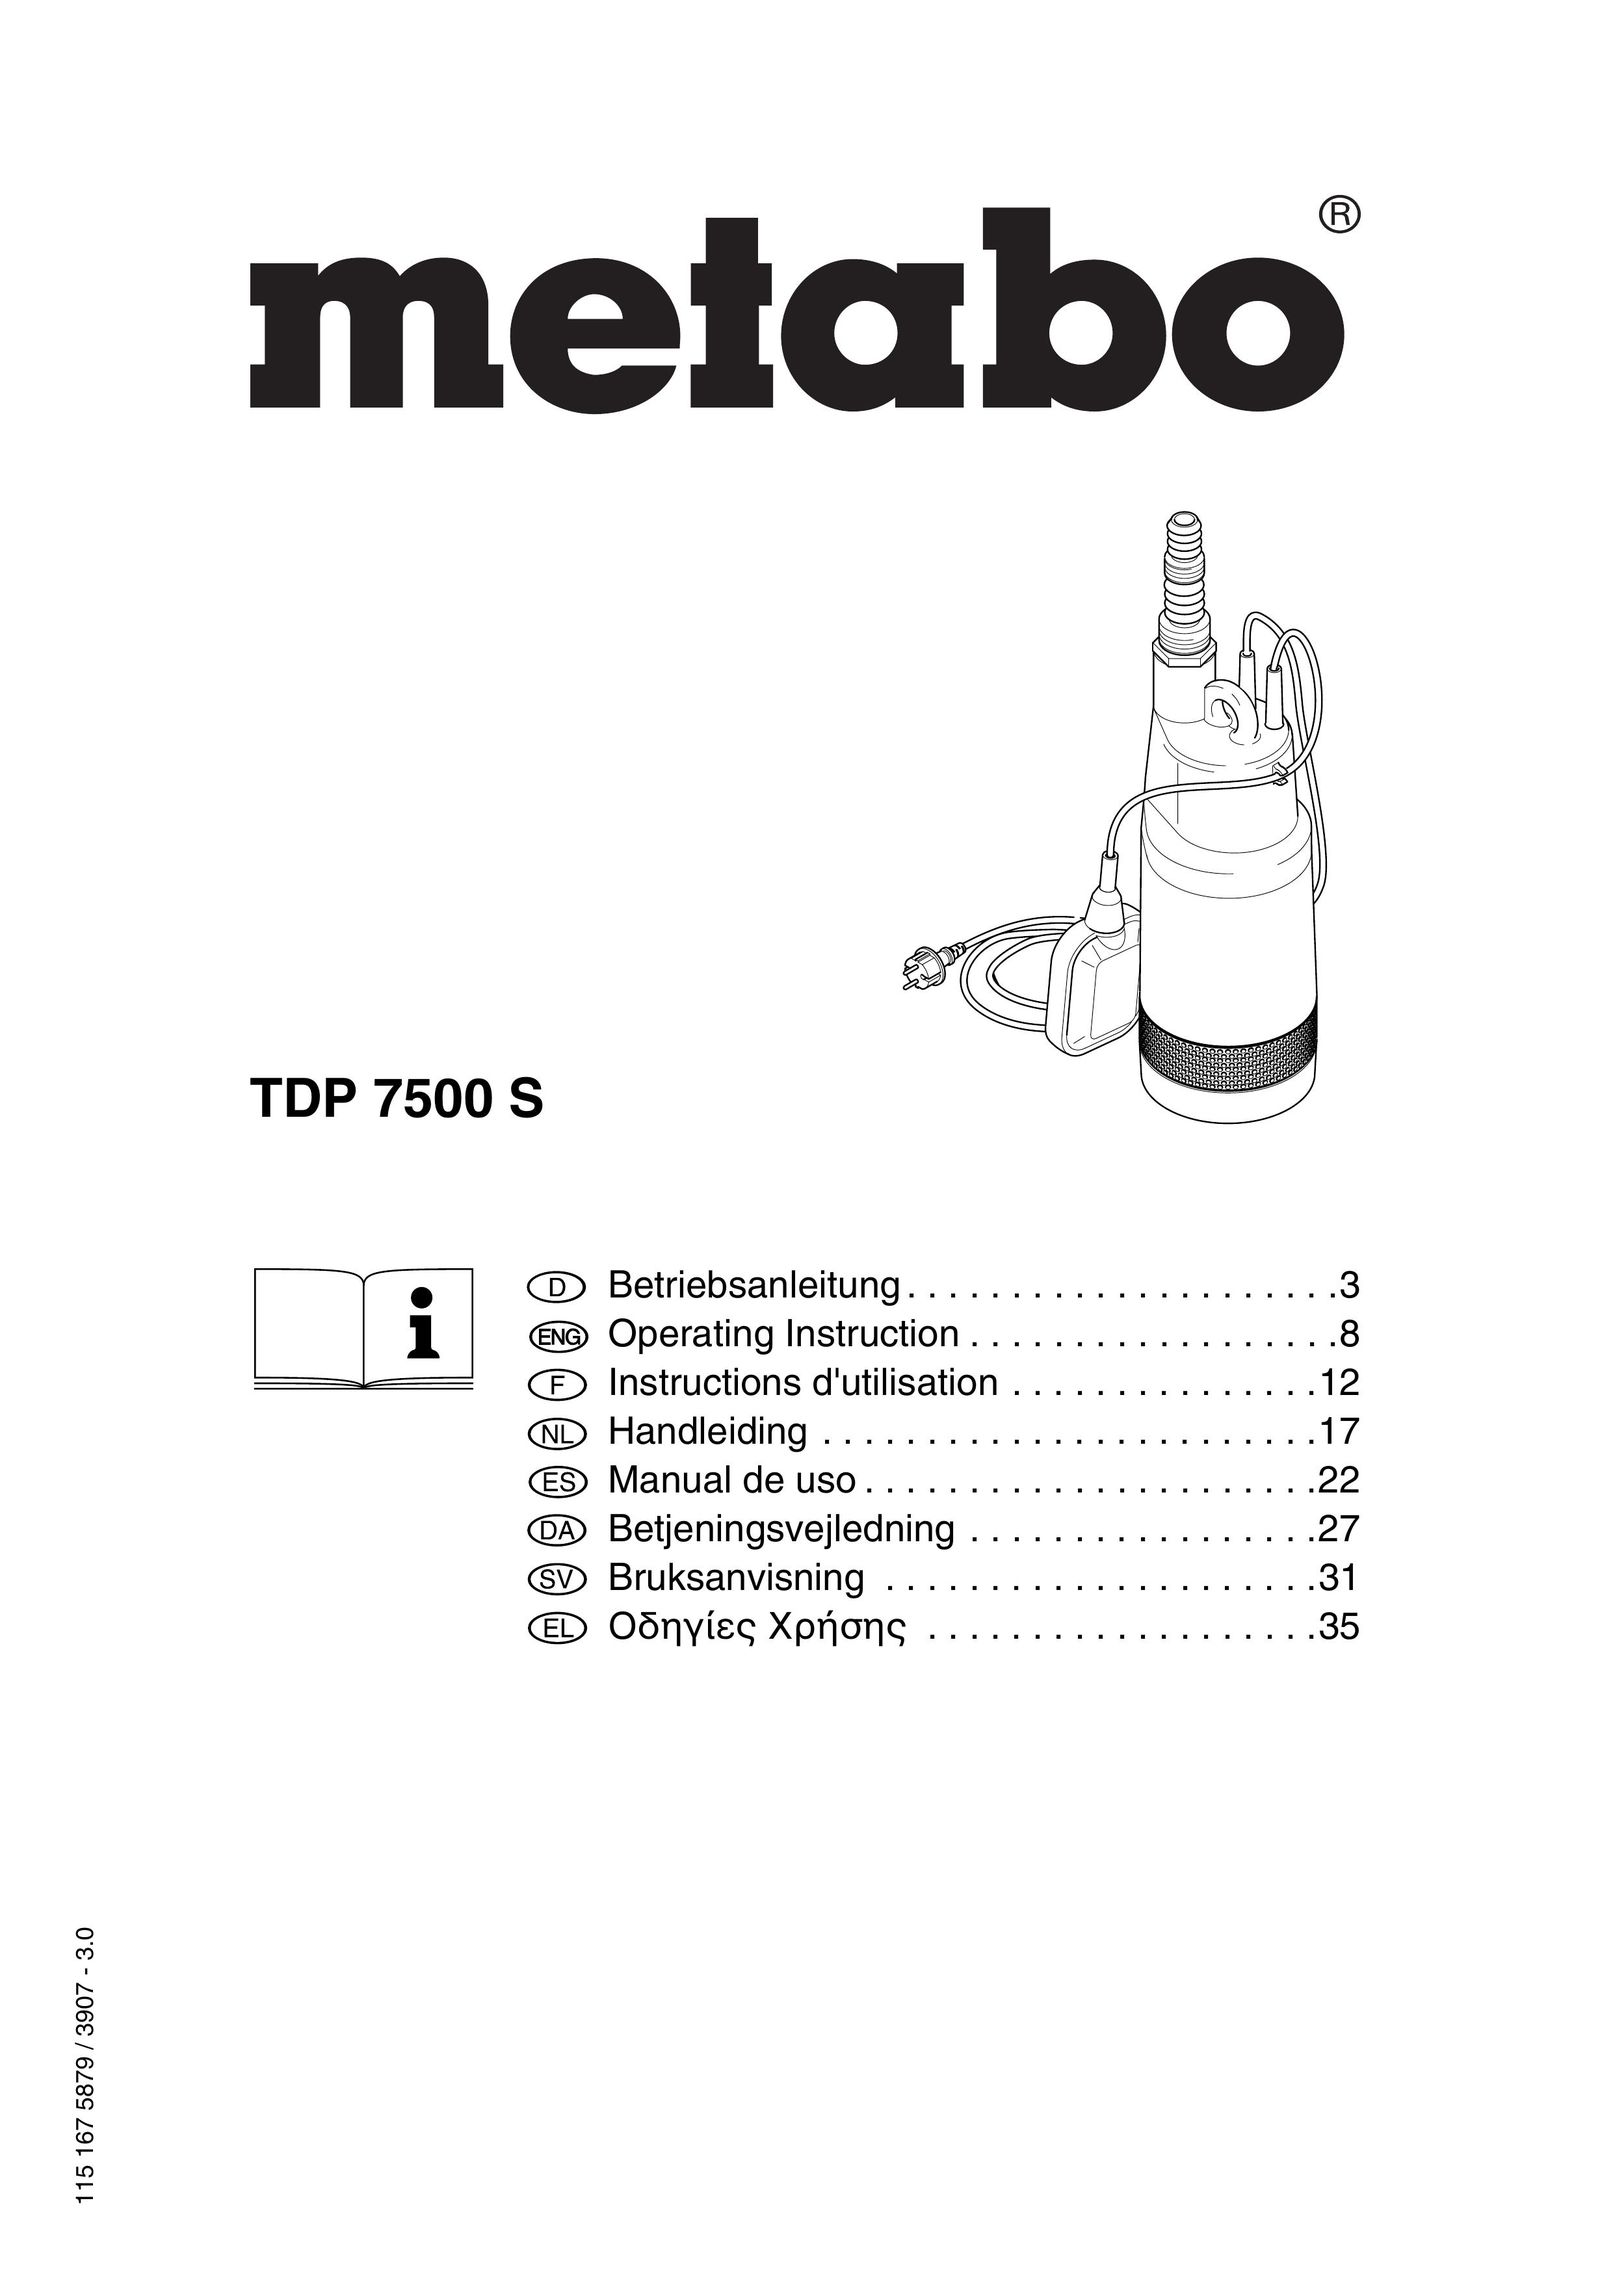 Metabo TDP 7500 S Plumbing Product User Manual